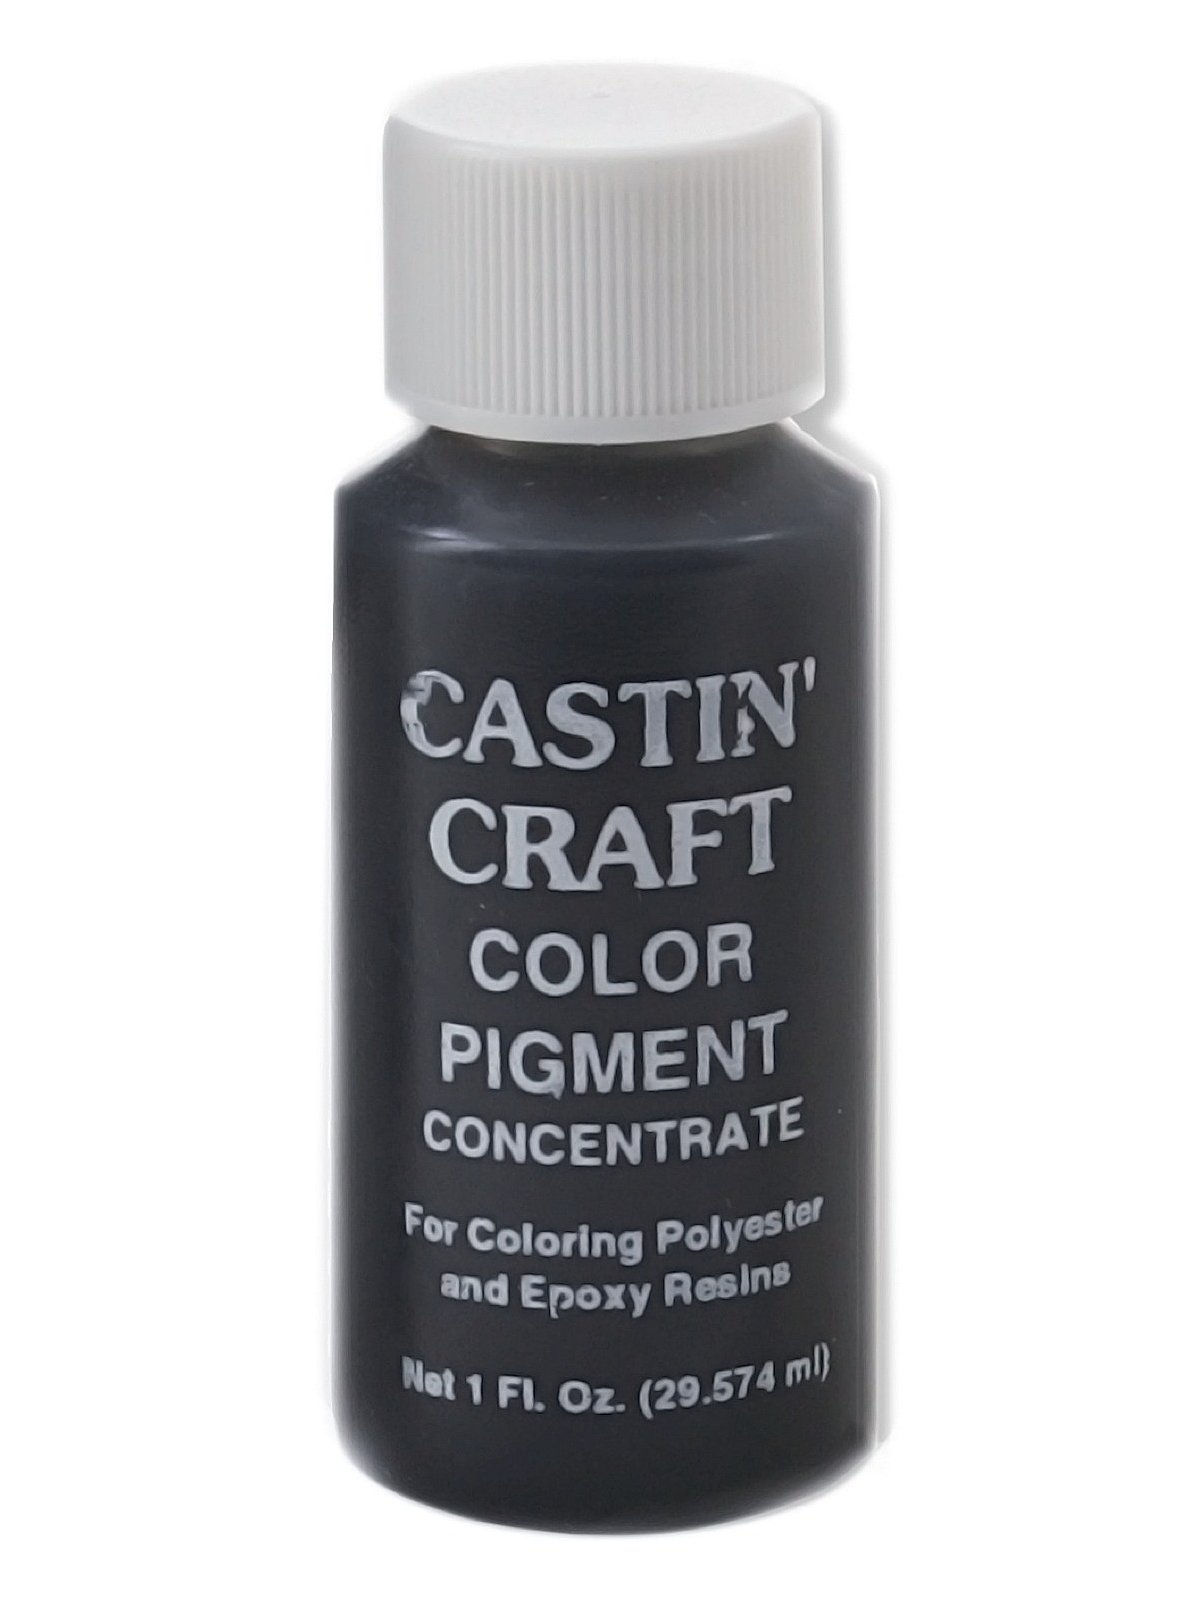 Castin'Craft Transparent Dye - 1 oz, Red